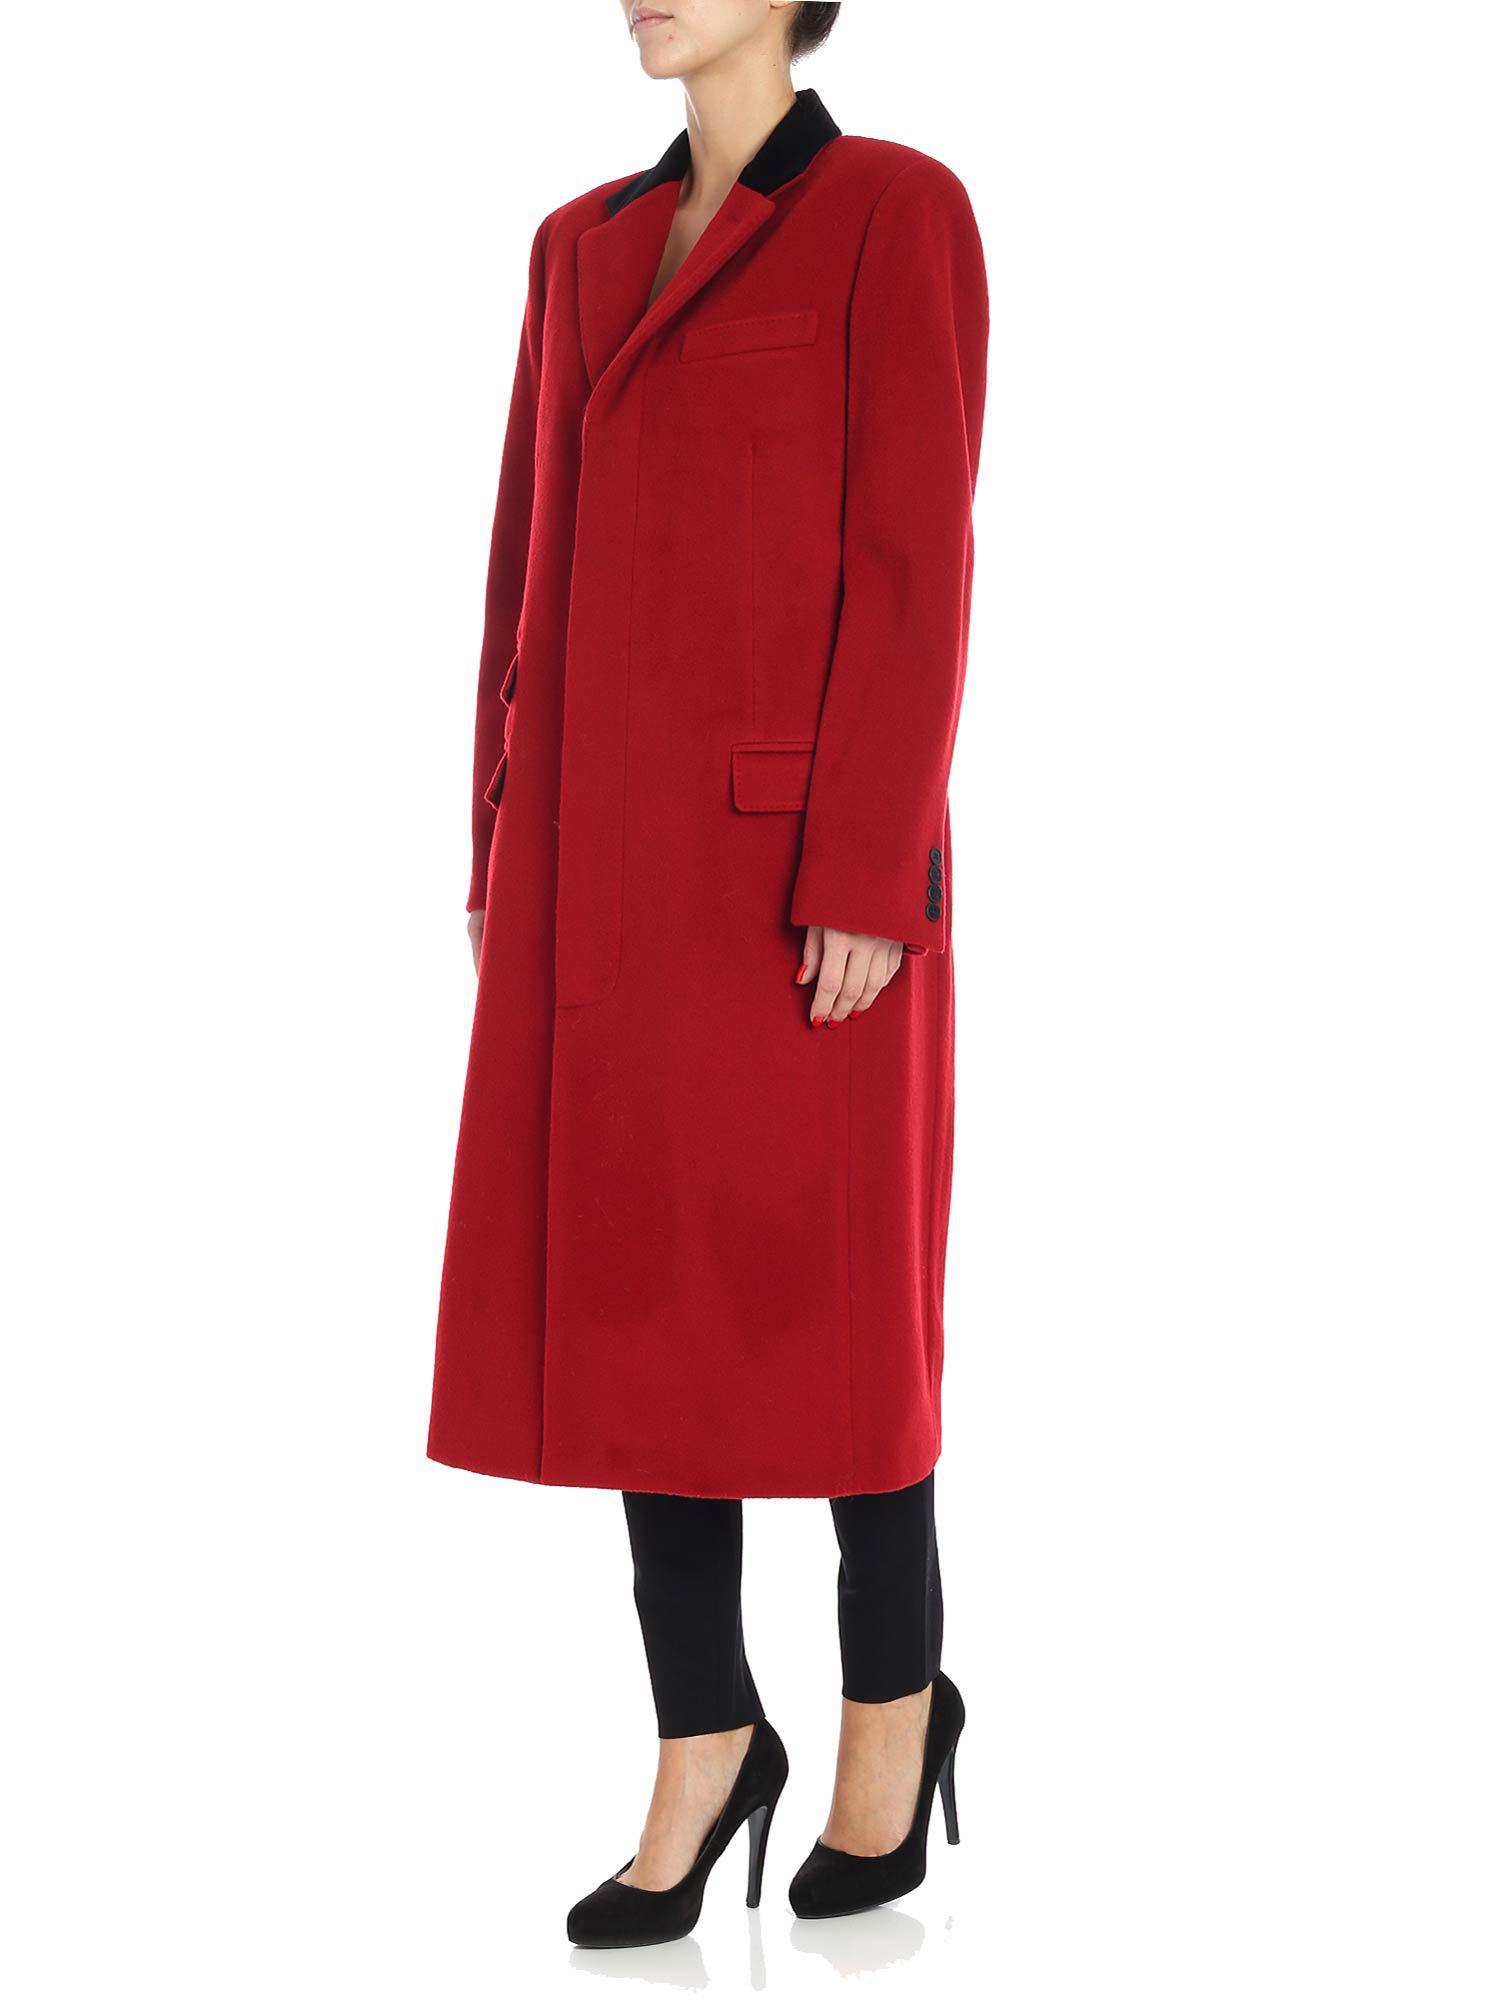 Polo Ralph Lauren Cashmere Red Woolen Cloth Long Coat - Lyst